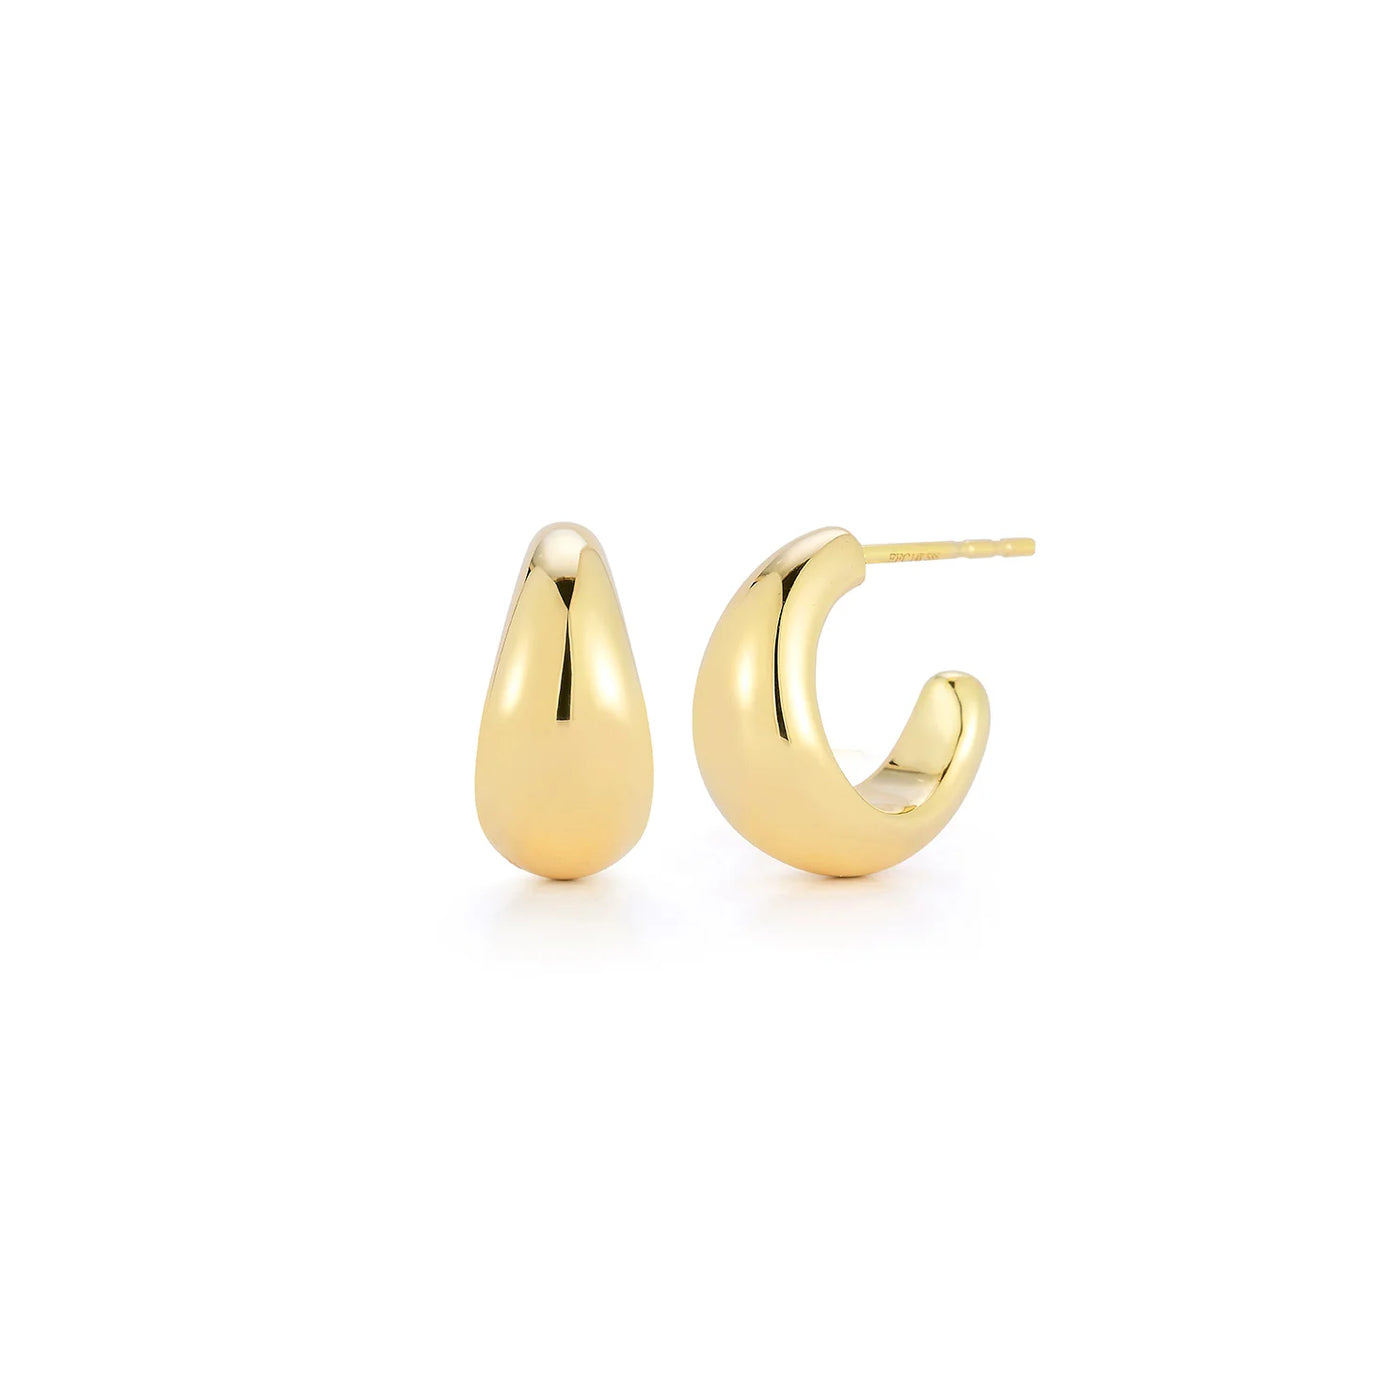 Gold Jumbo Dome Huggie Earrings/15mm